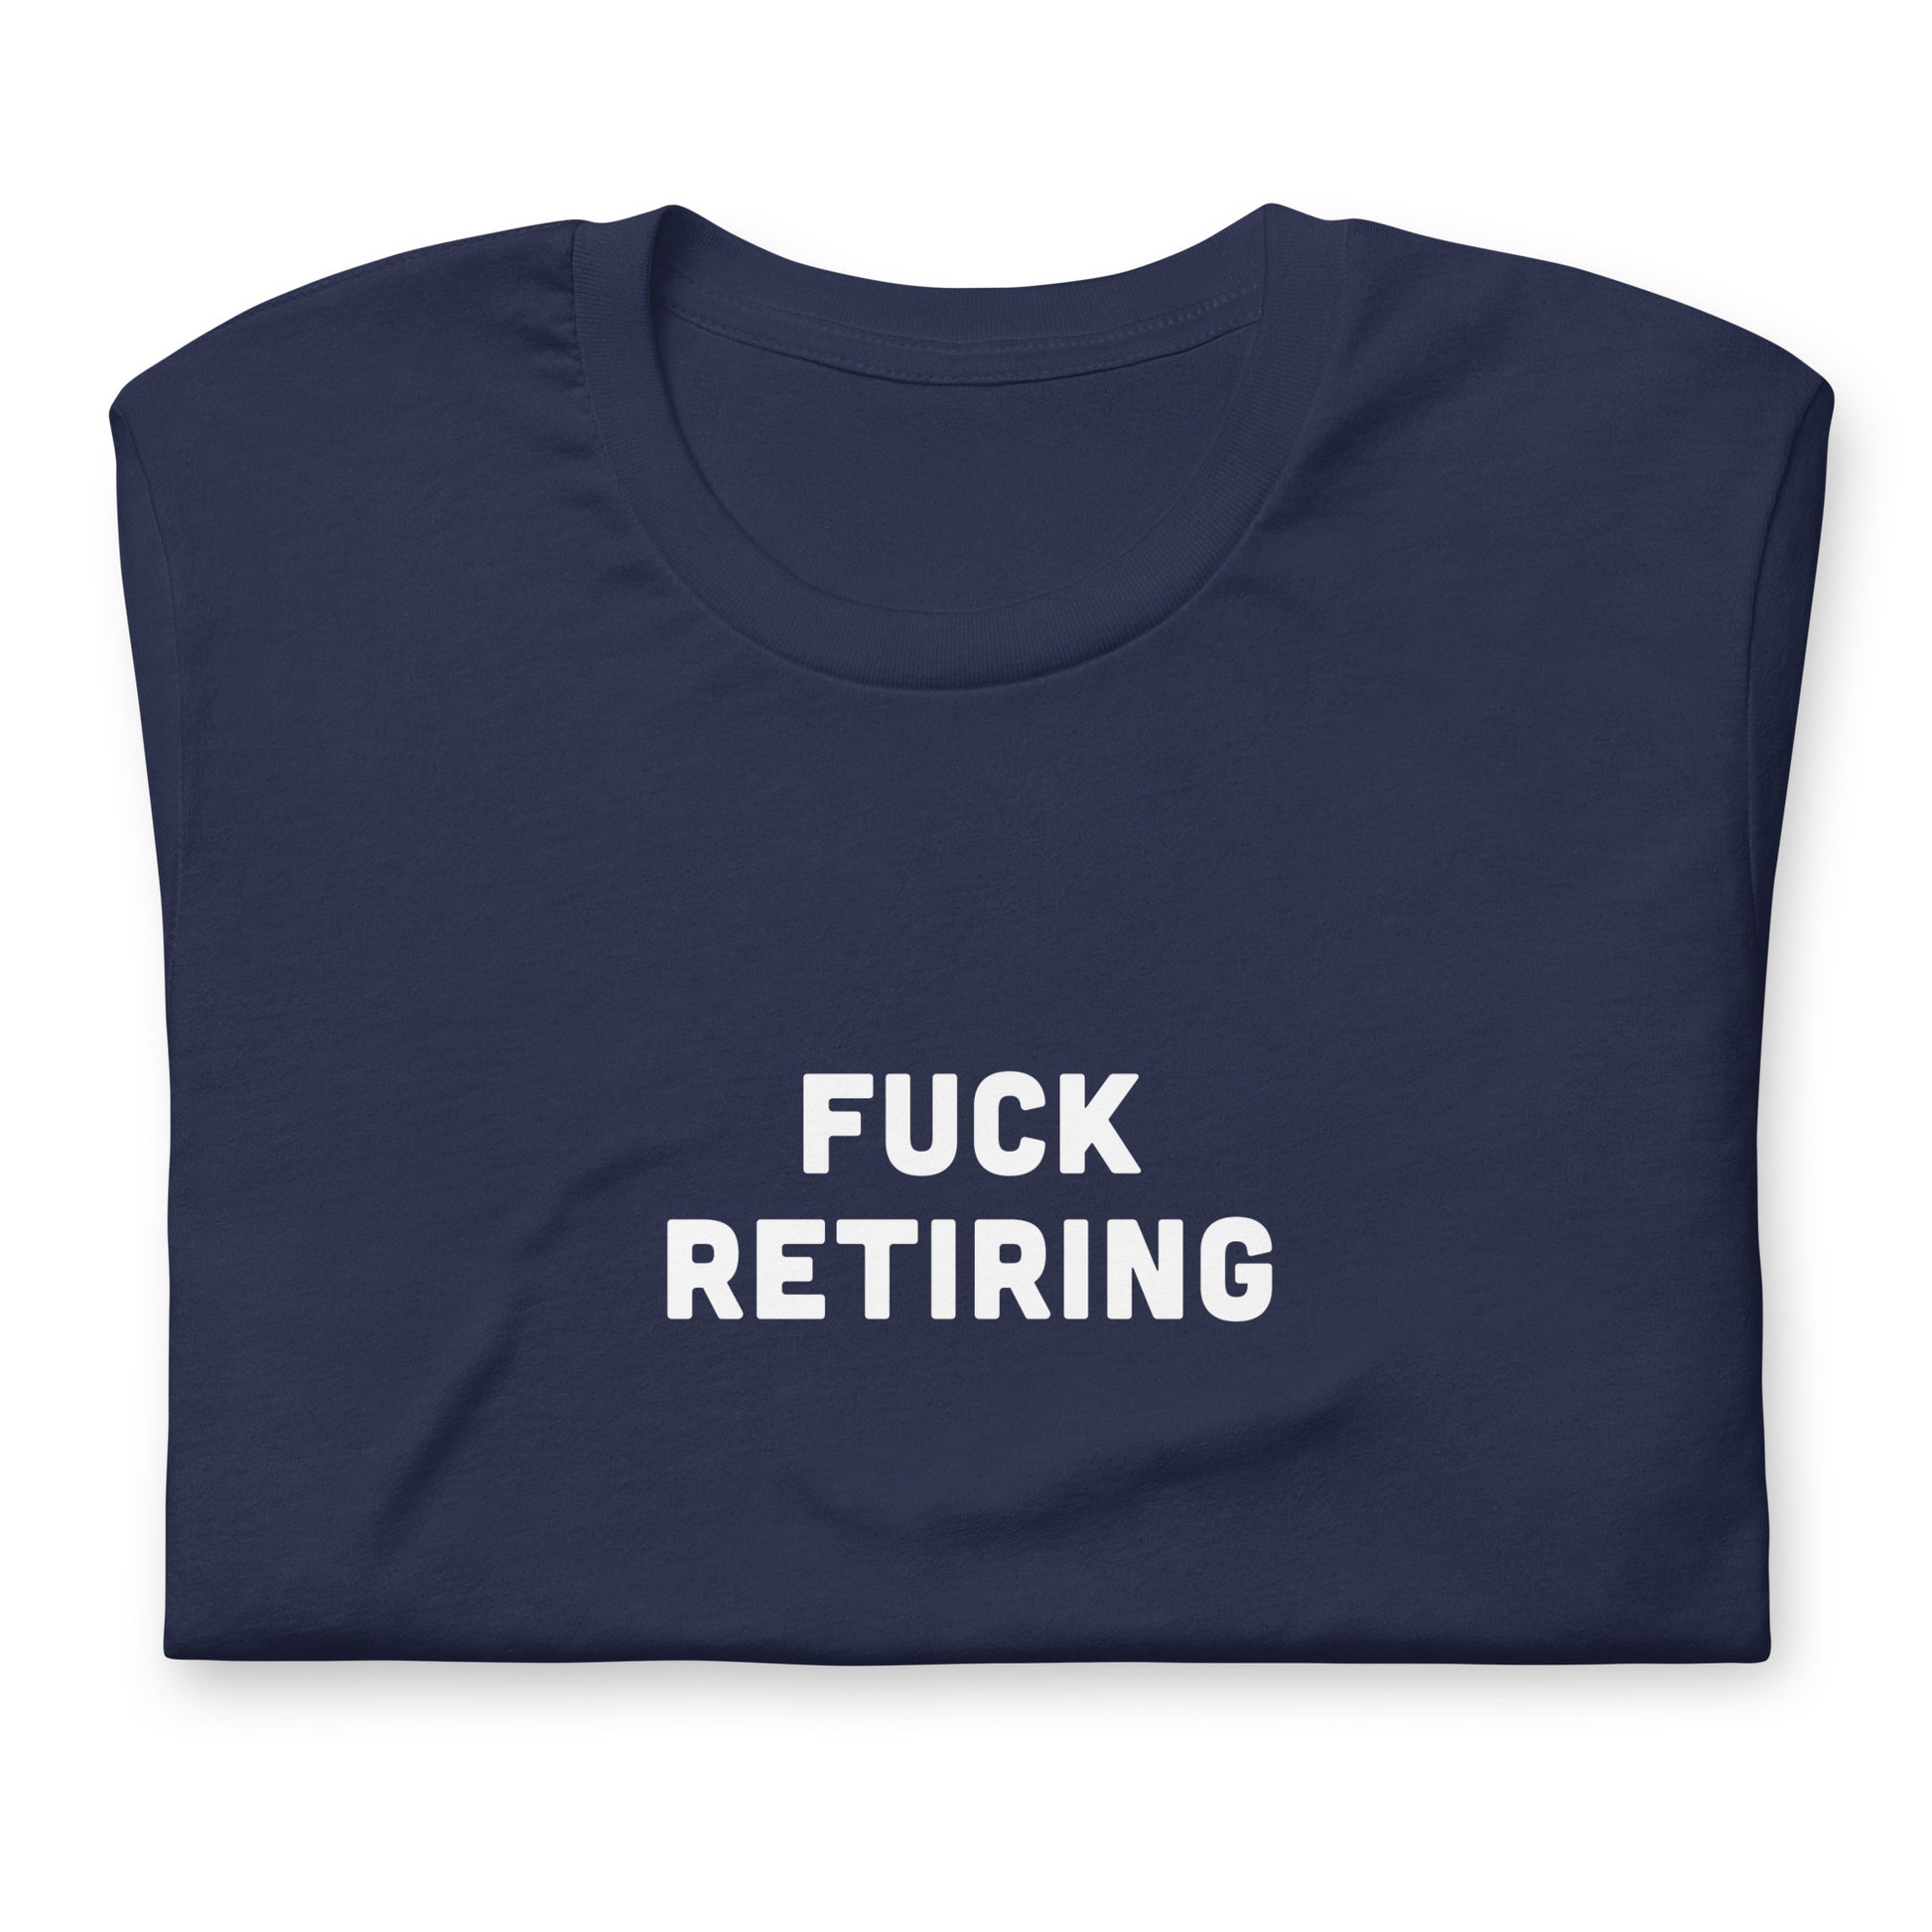 Fuck Retiring T-Shirt Size XL Color Black